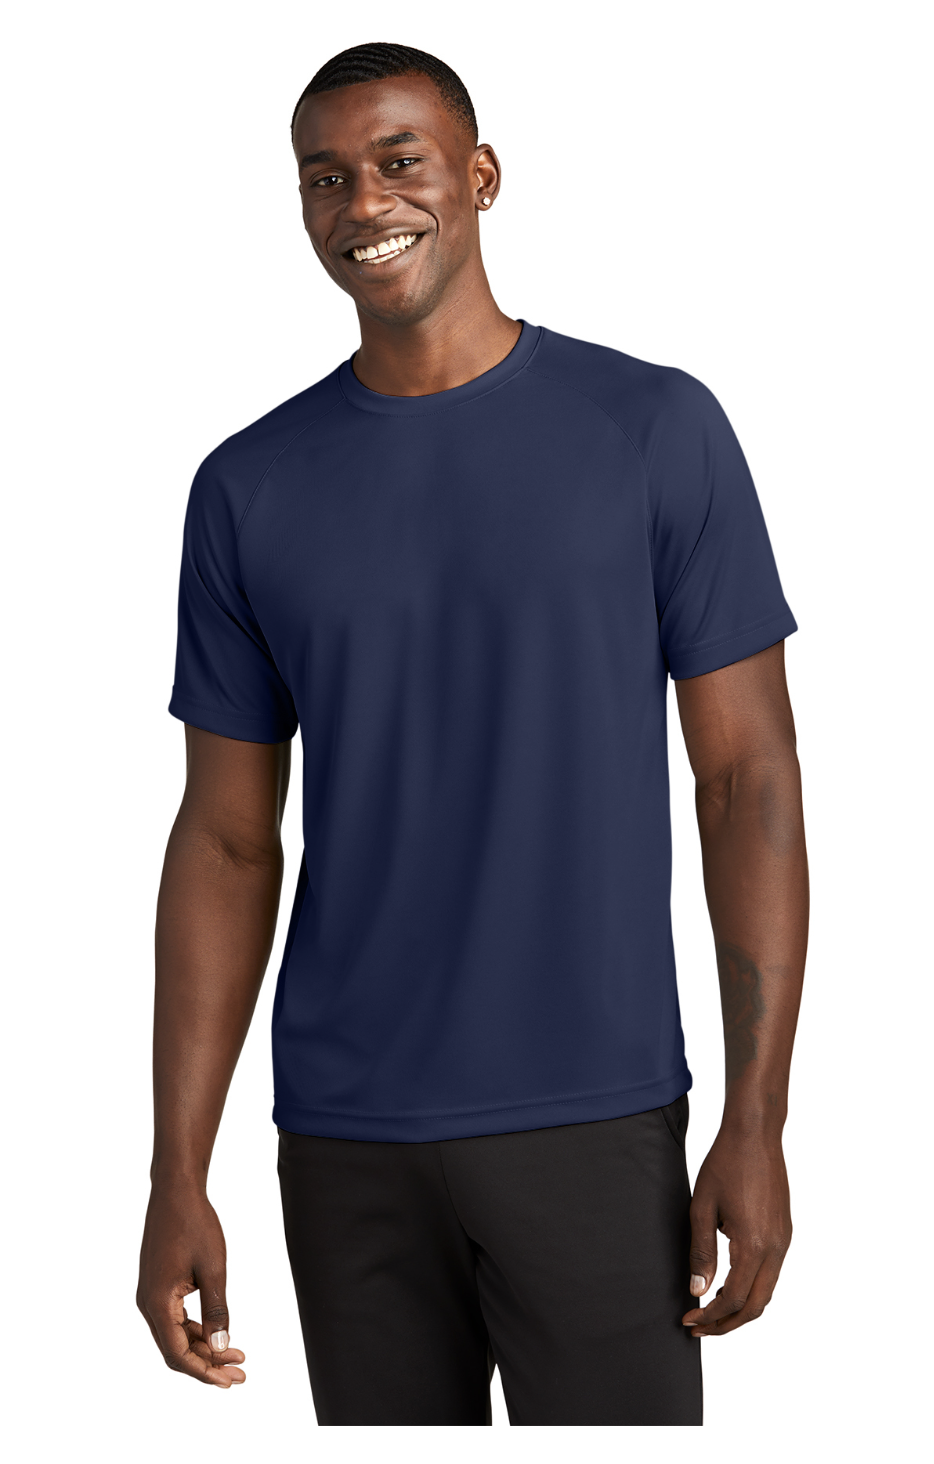 Sport-Tek® Dry Zone® Short Sleeve Raglan T-Shirt